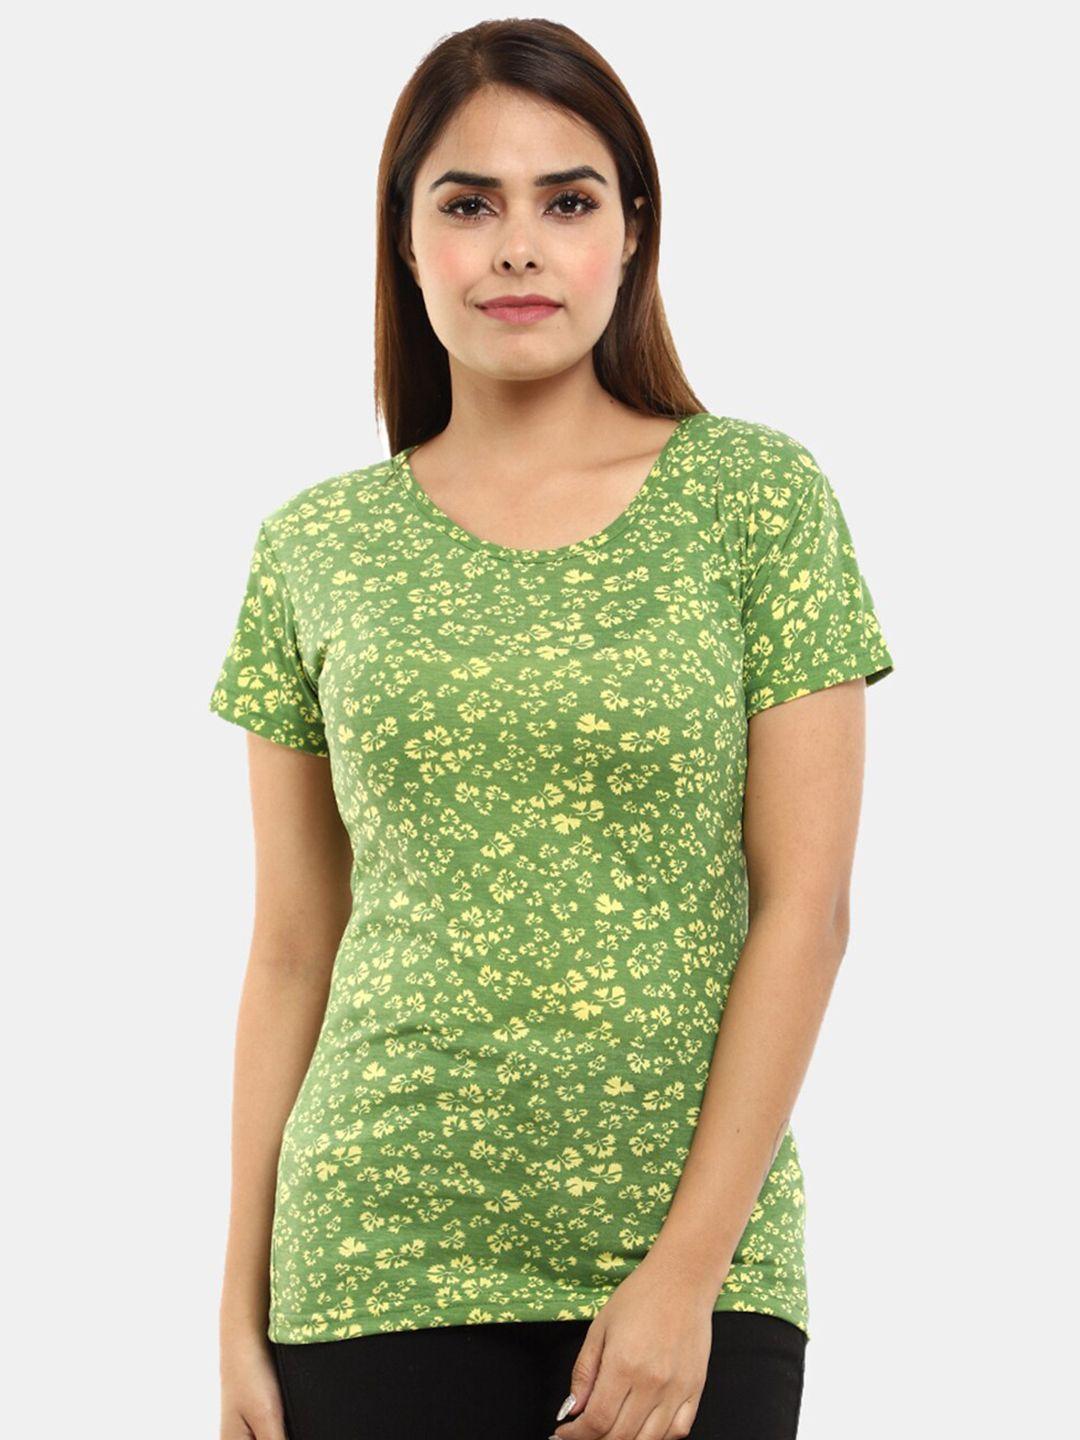 v-mart women green floral printed t-shirt